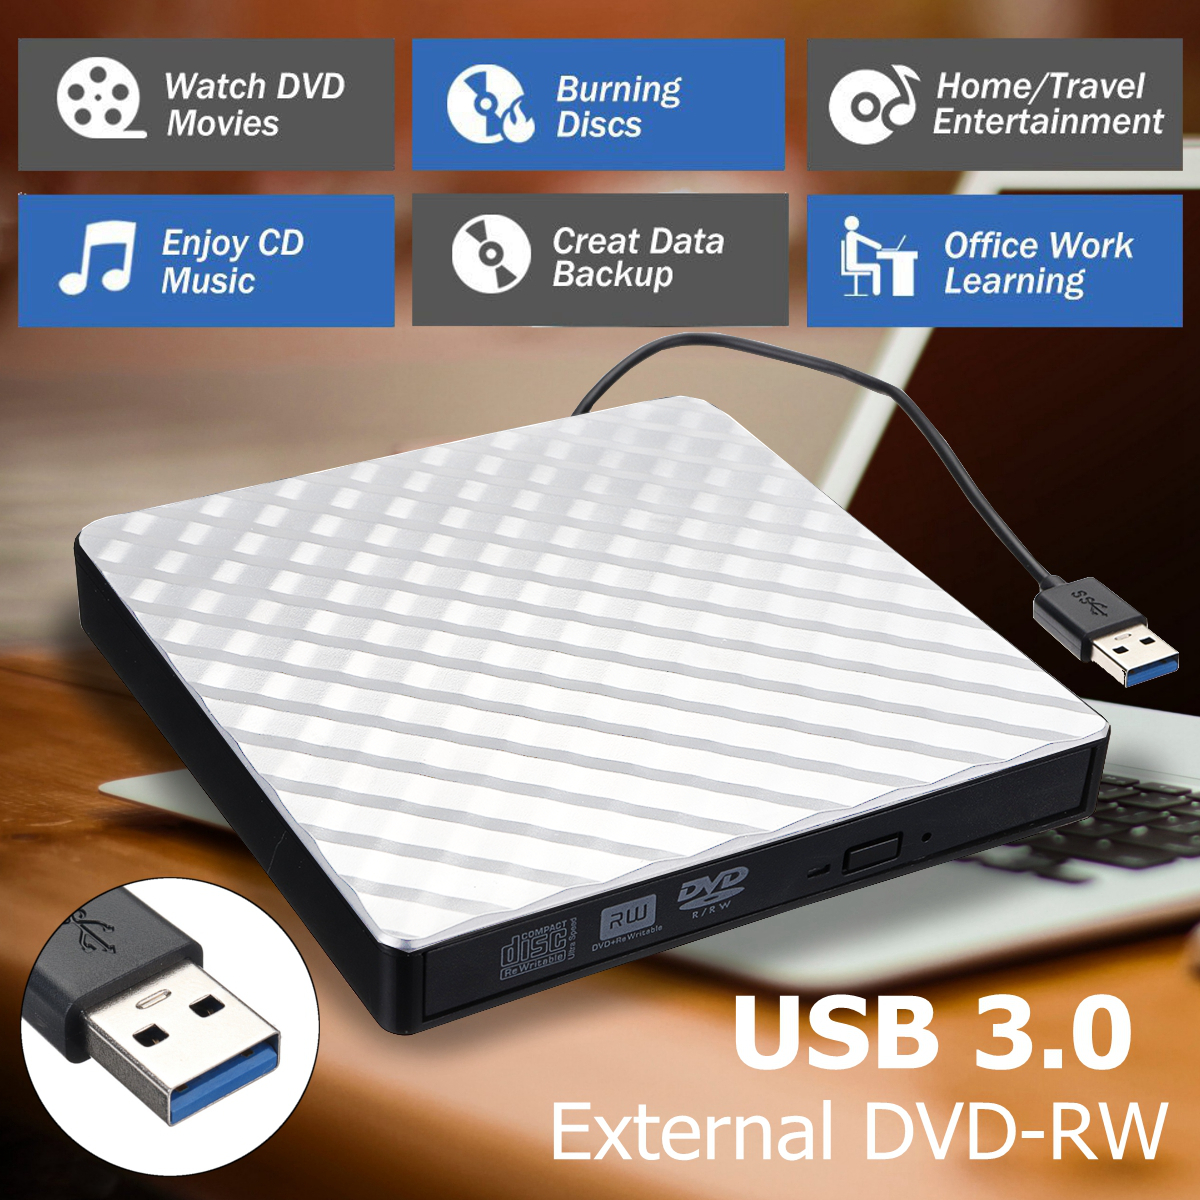 External-USB-30-DVD-RW-CD-Writer-Slim-Carbon-Grain-Drive-Burner-Reader-Player-For-PC-Laptop-Optical--1536013-1